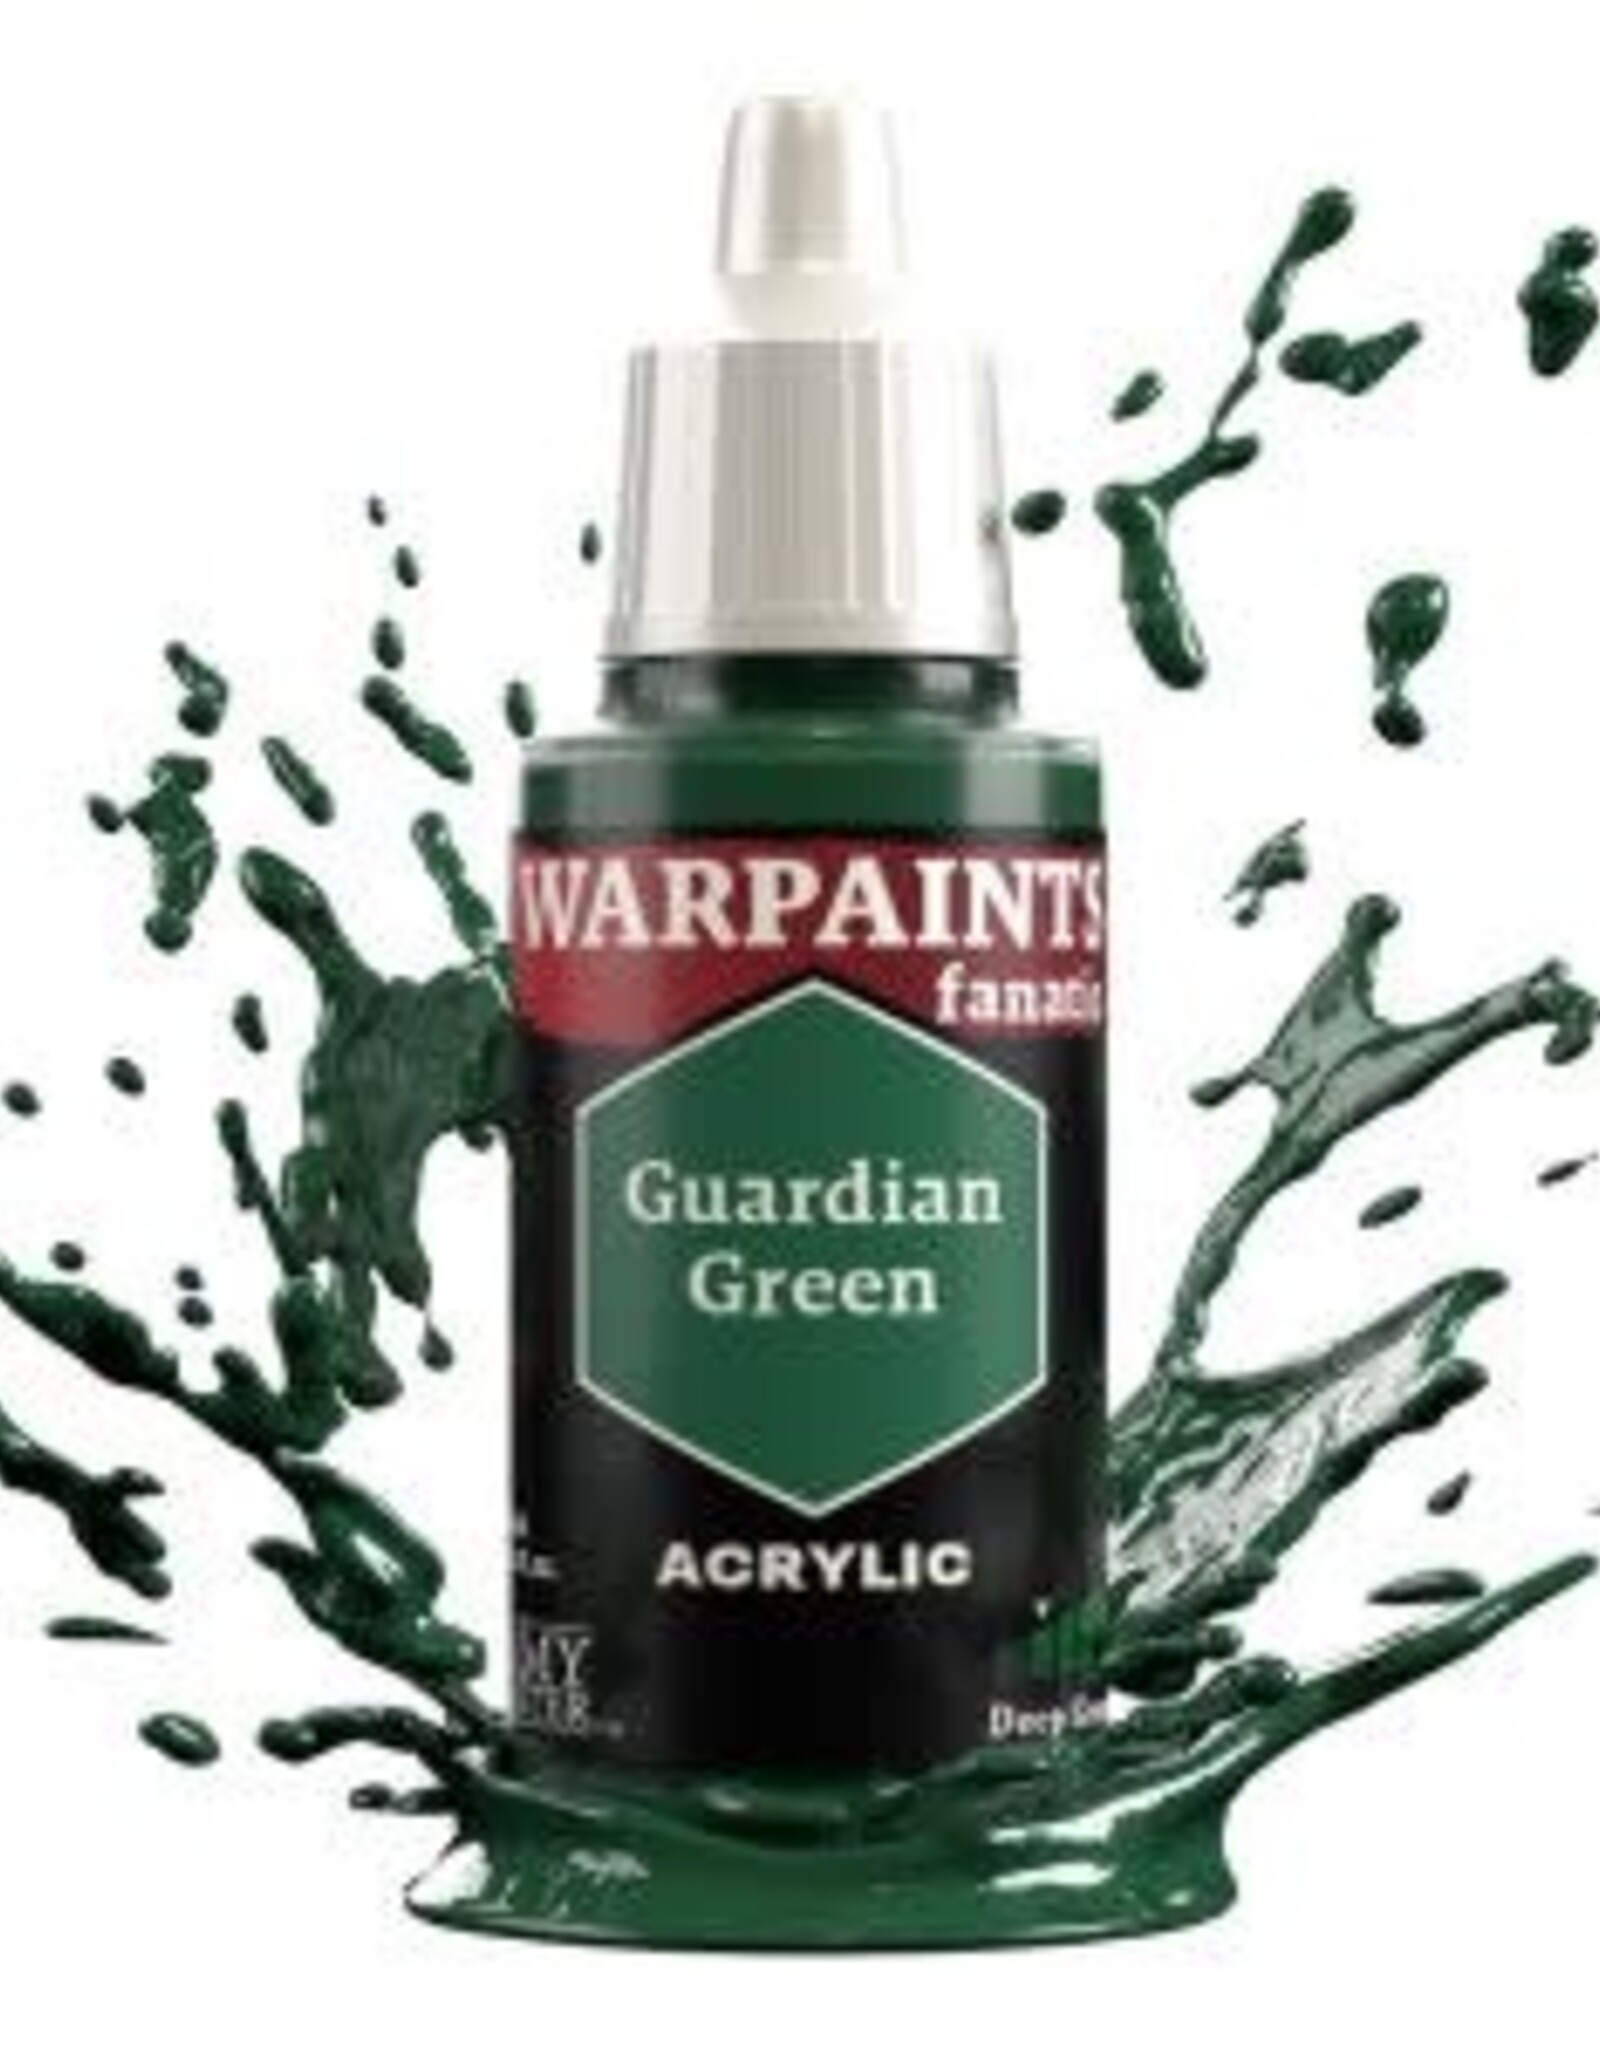 Warpaints Fanatic: Guardian Green